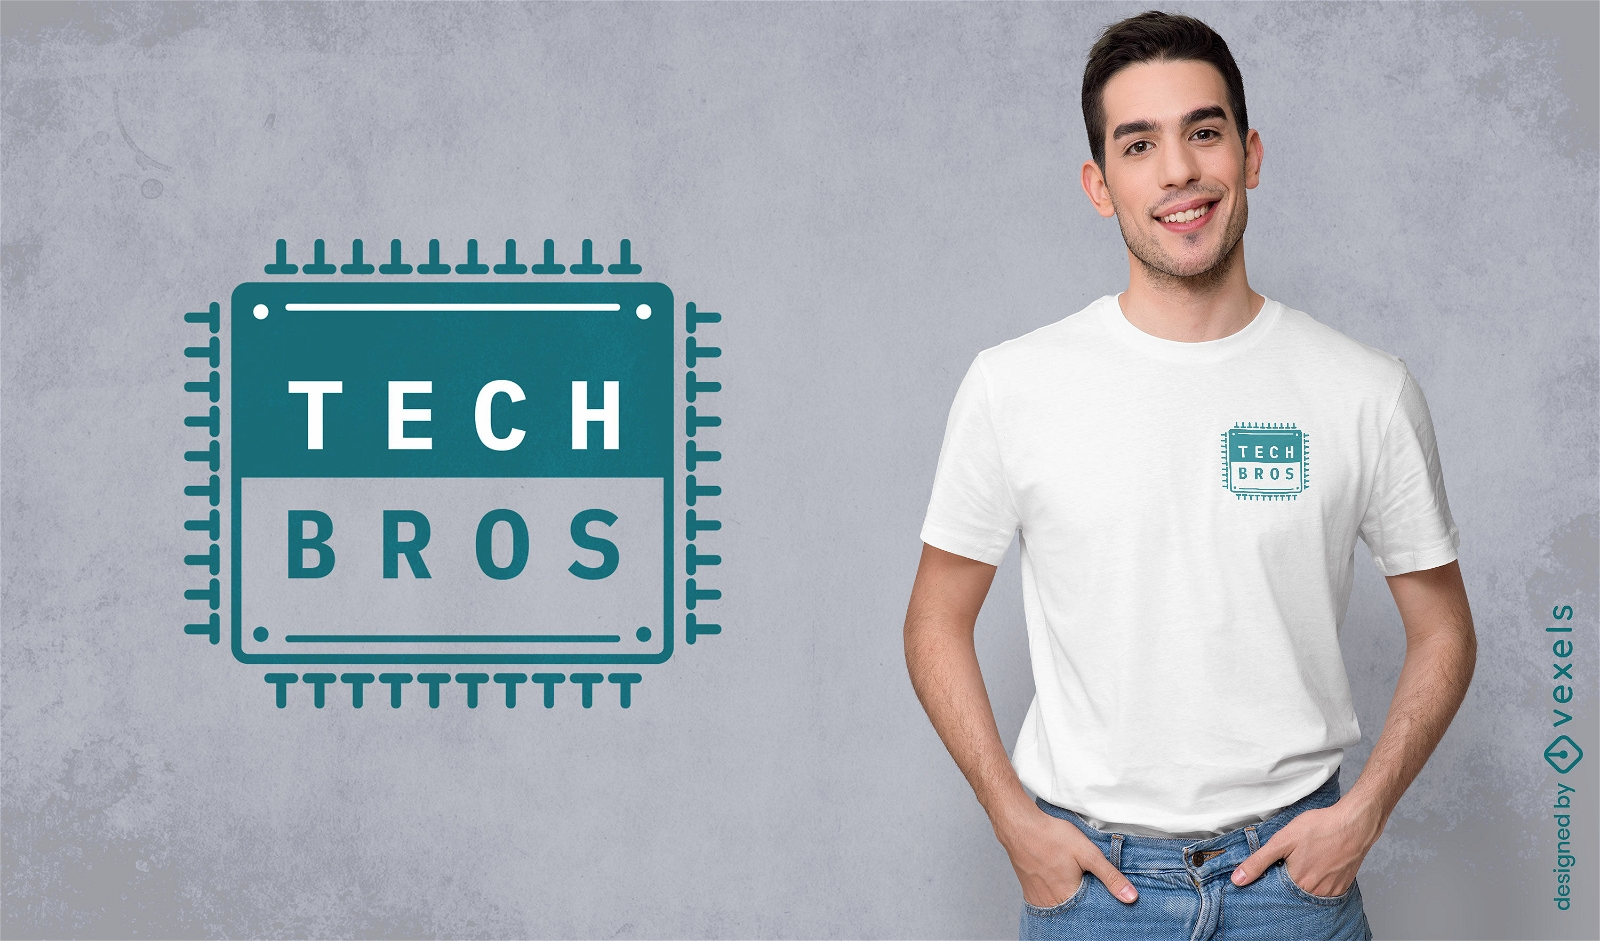 Tech bros t-shirt design